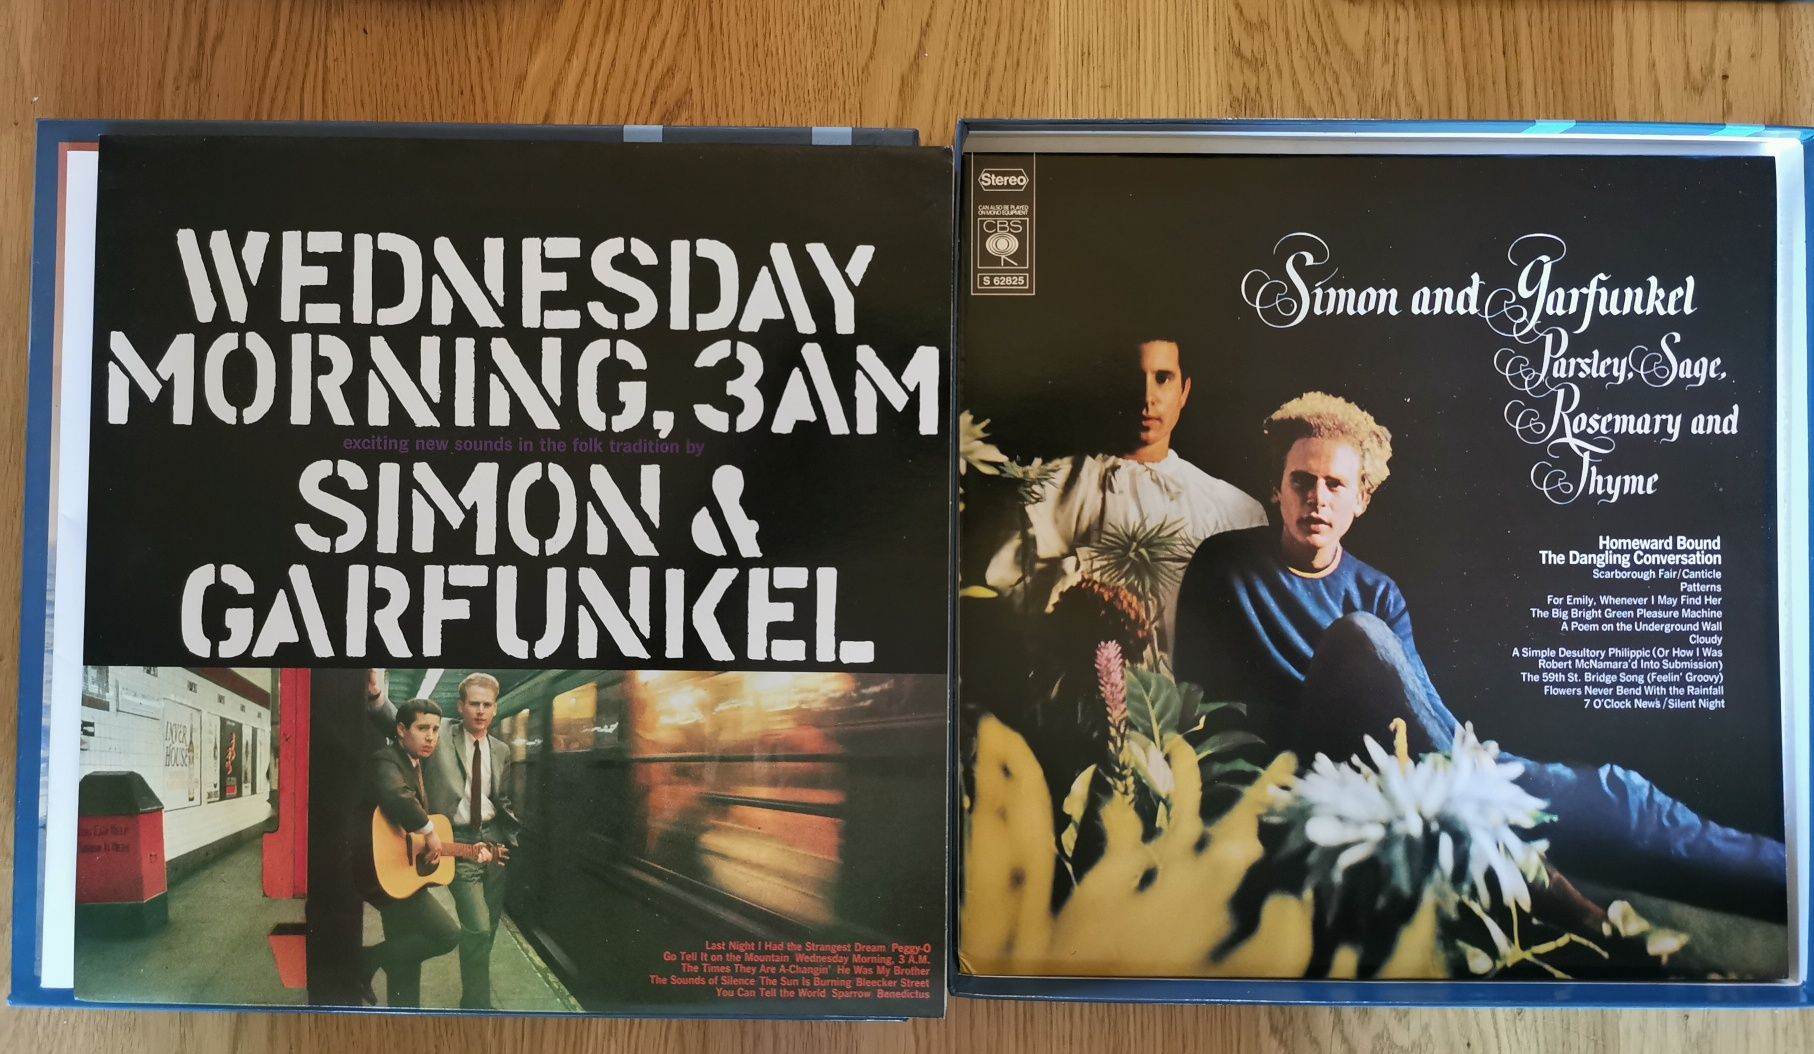 Colectie/boxset 5 vinyluri Simon&Garfunkel